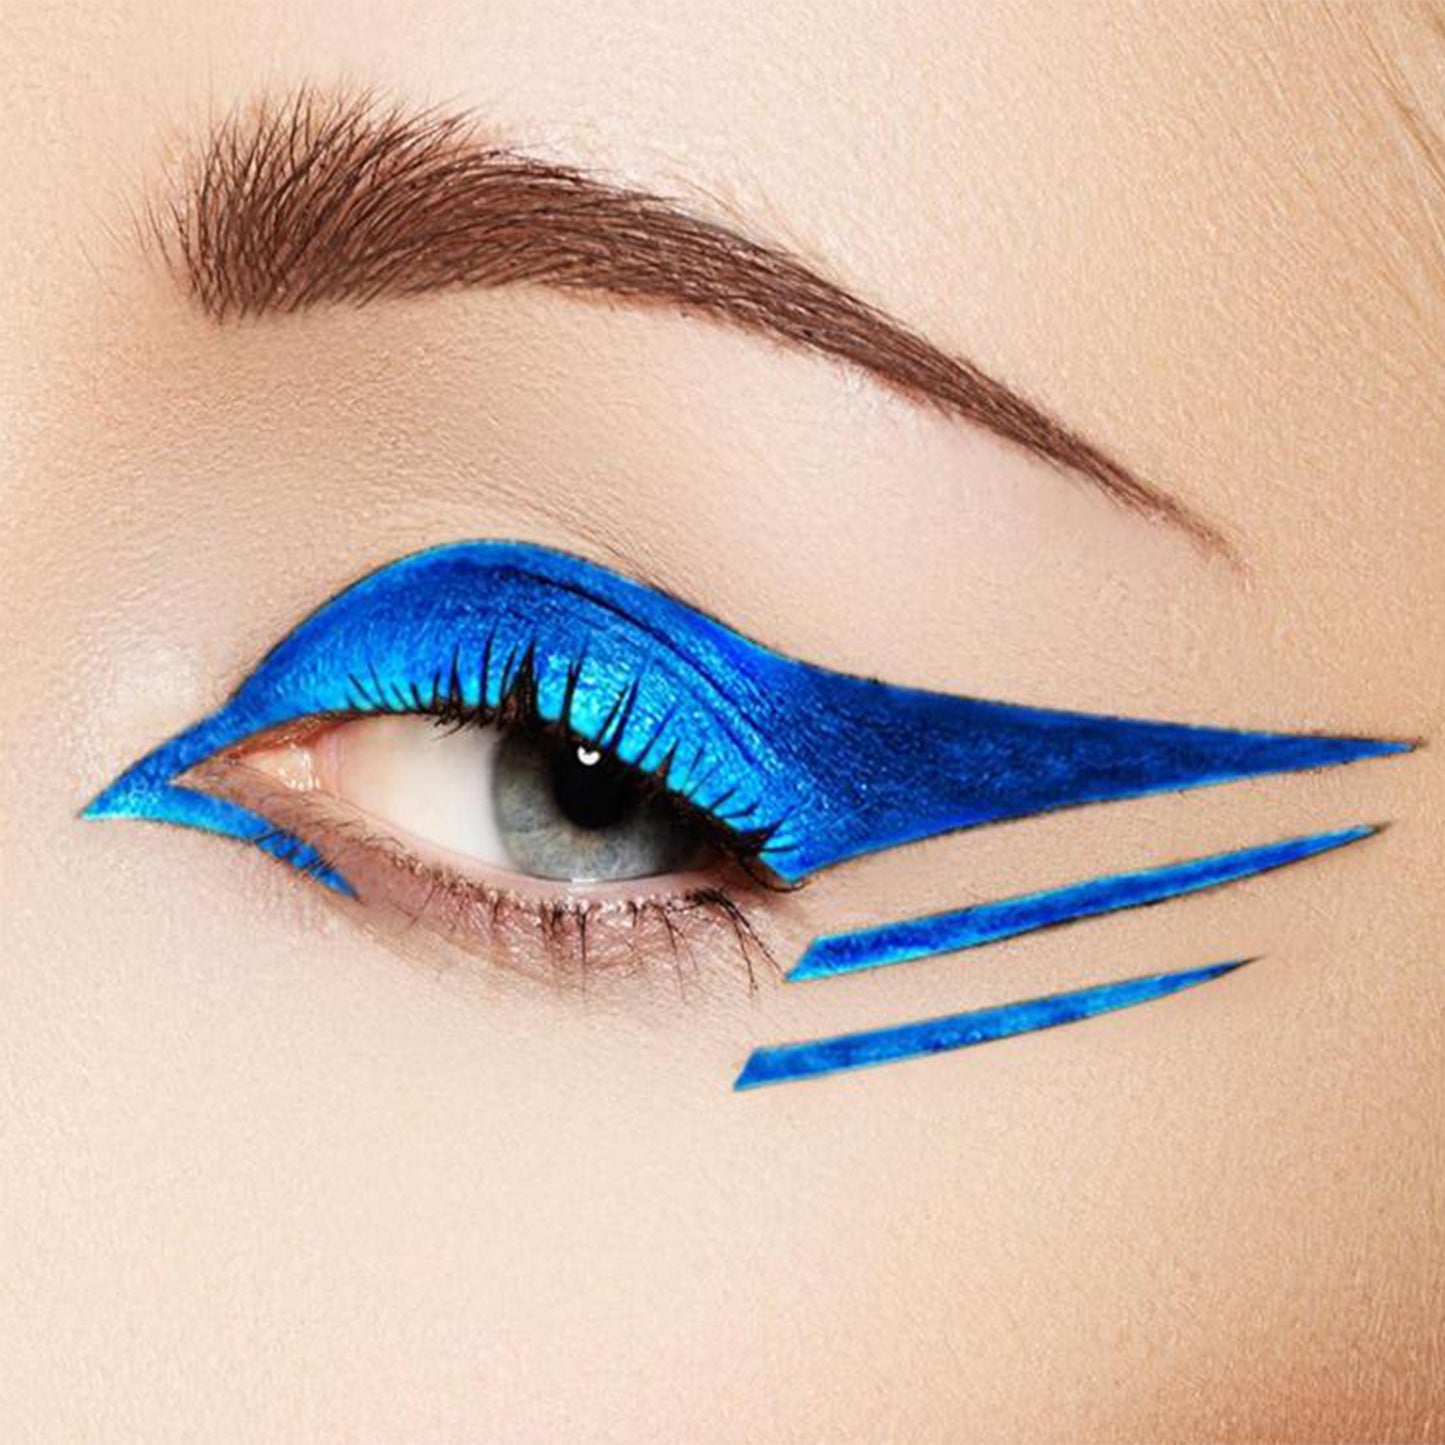 Krayons Insta Dri Sparkling Eyeliner, Golden, Blue, Waterproof, Longlasting, 7ml Each, Combo (Pack of 2)